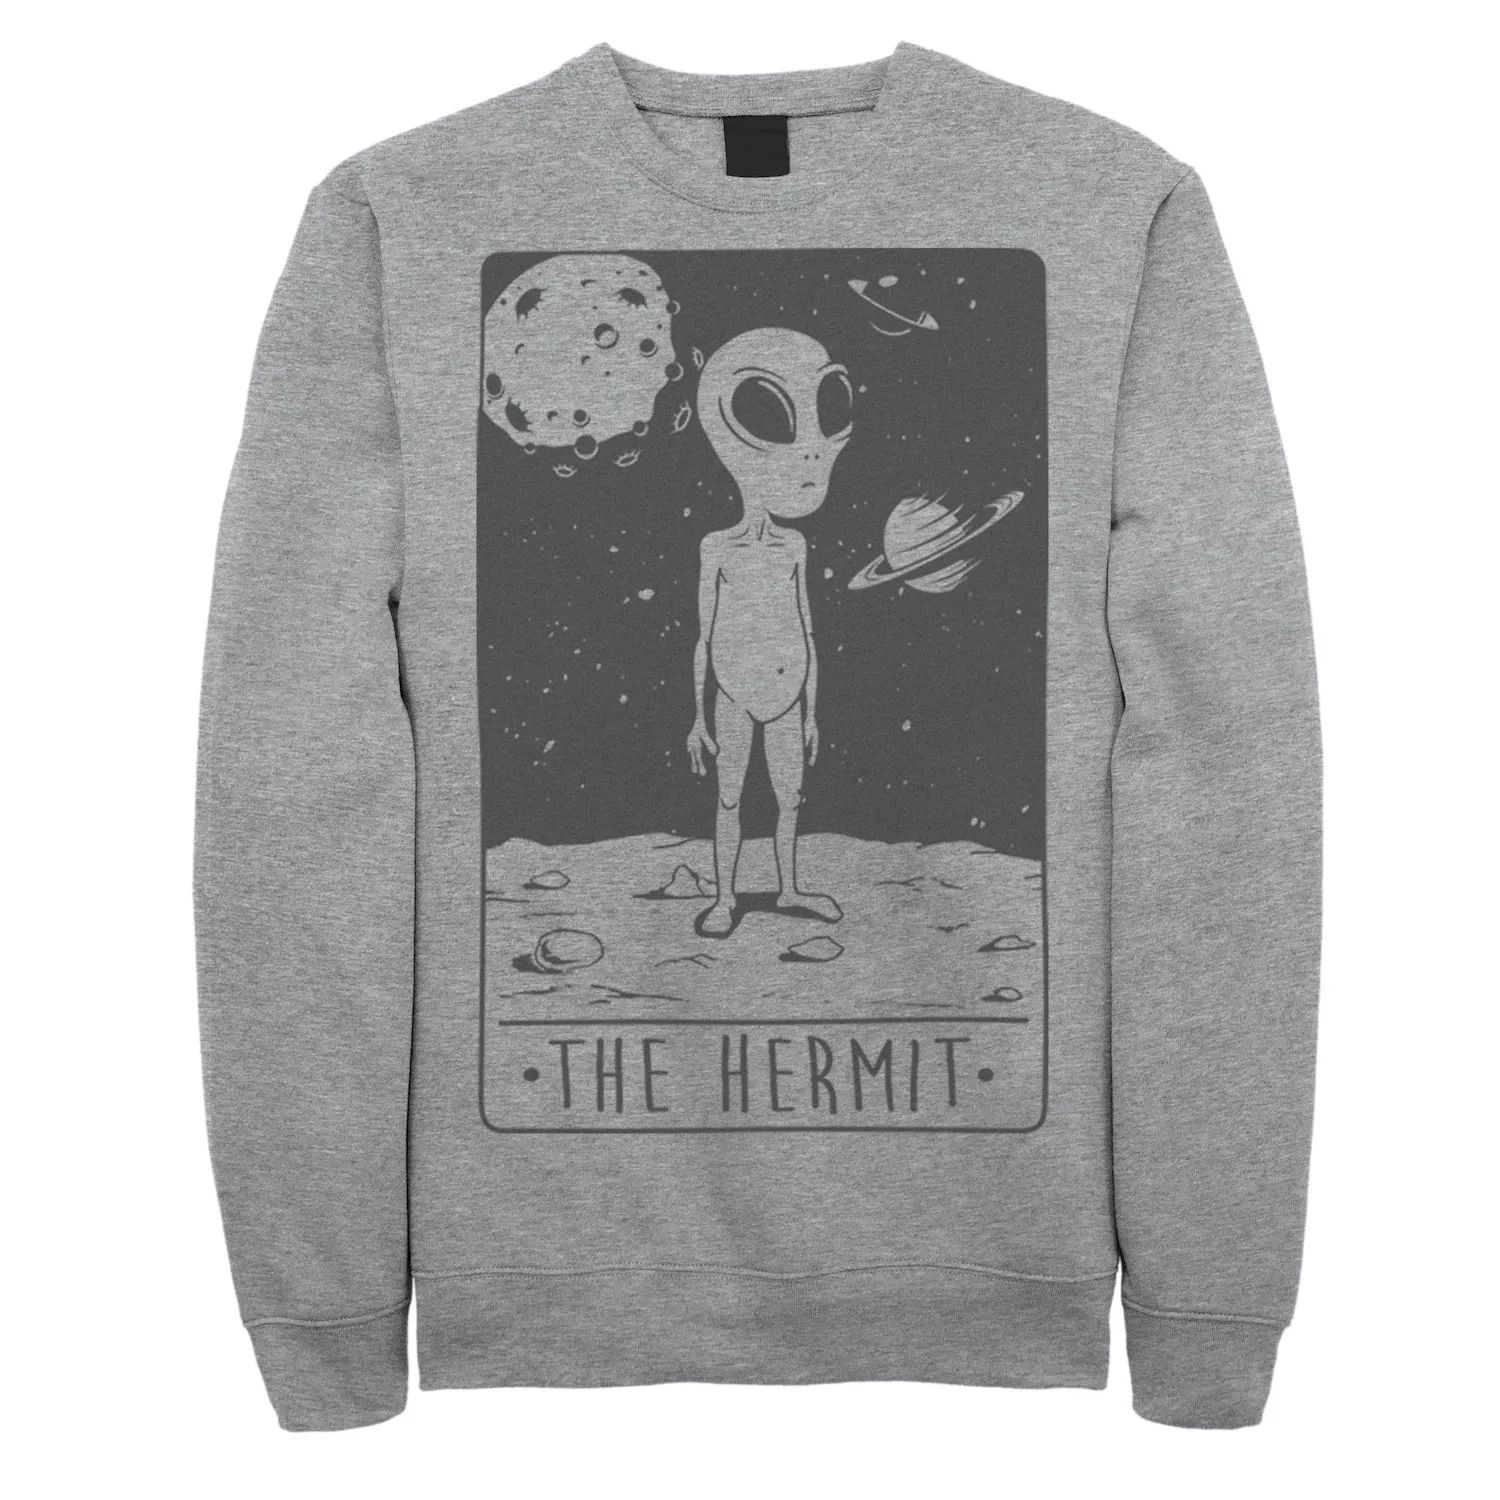 Мужской флисовый пуловер с рисунком Space Hermit Licensed Character